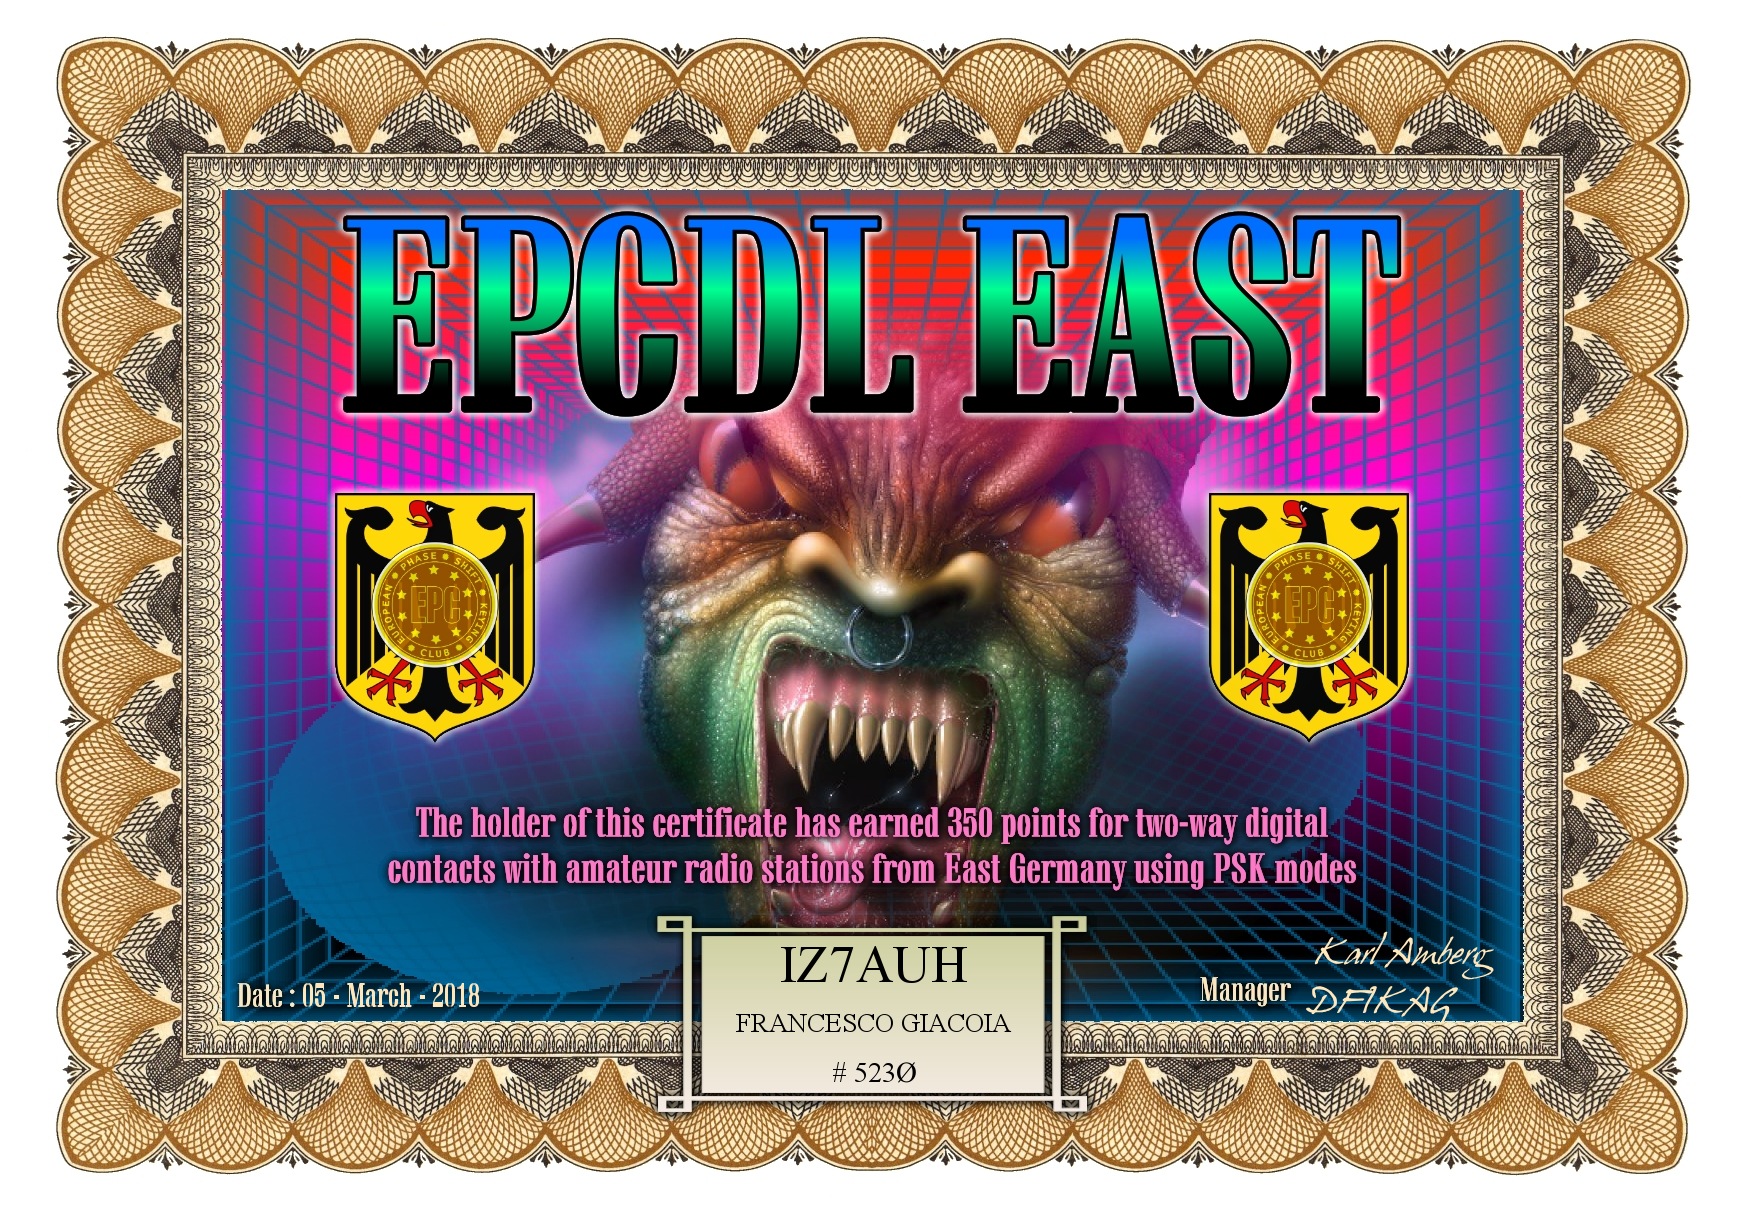 IZ7AUH-EPCDL-EAST